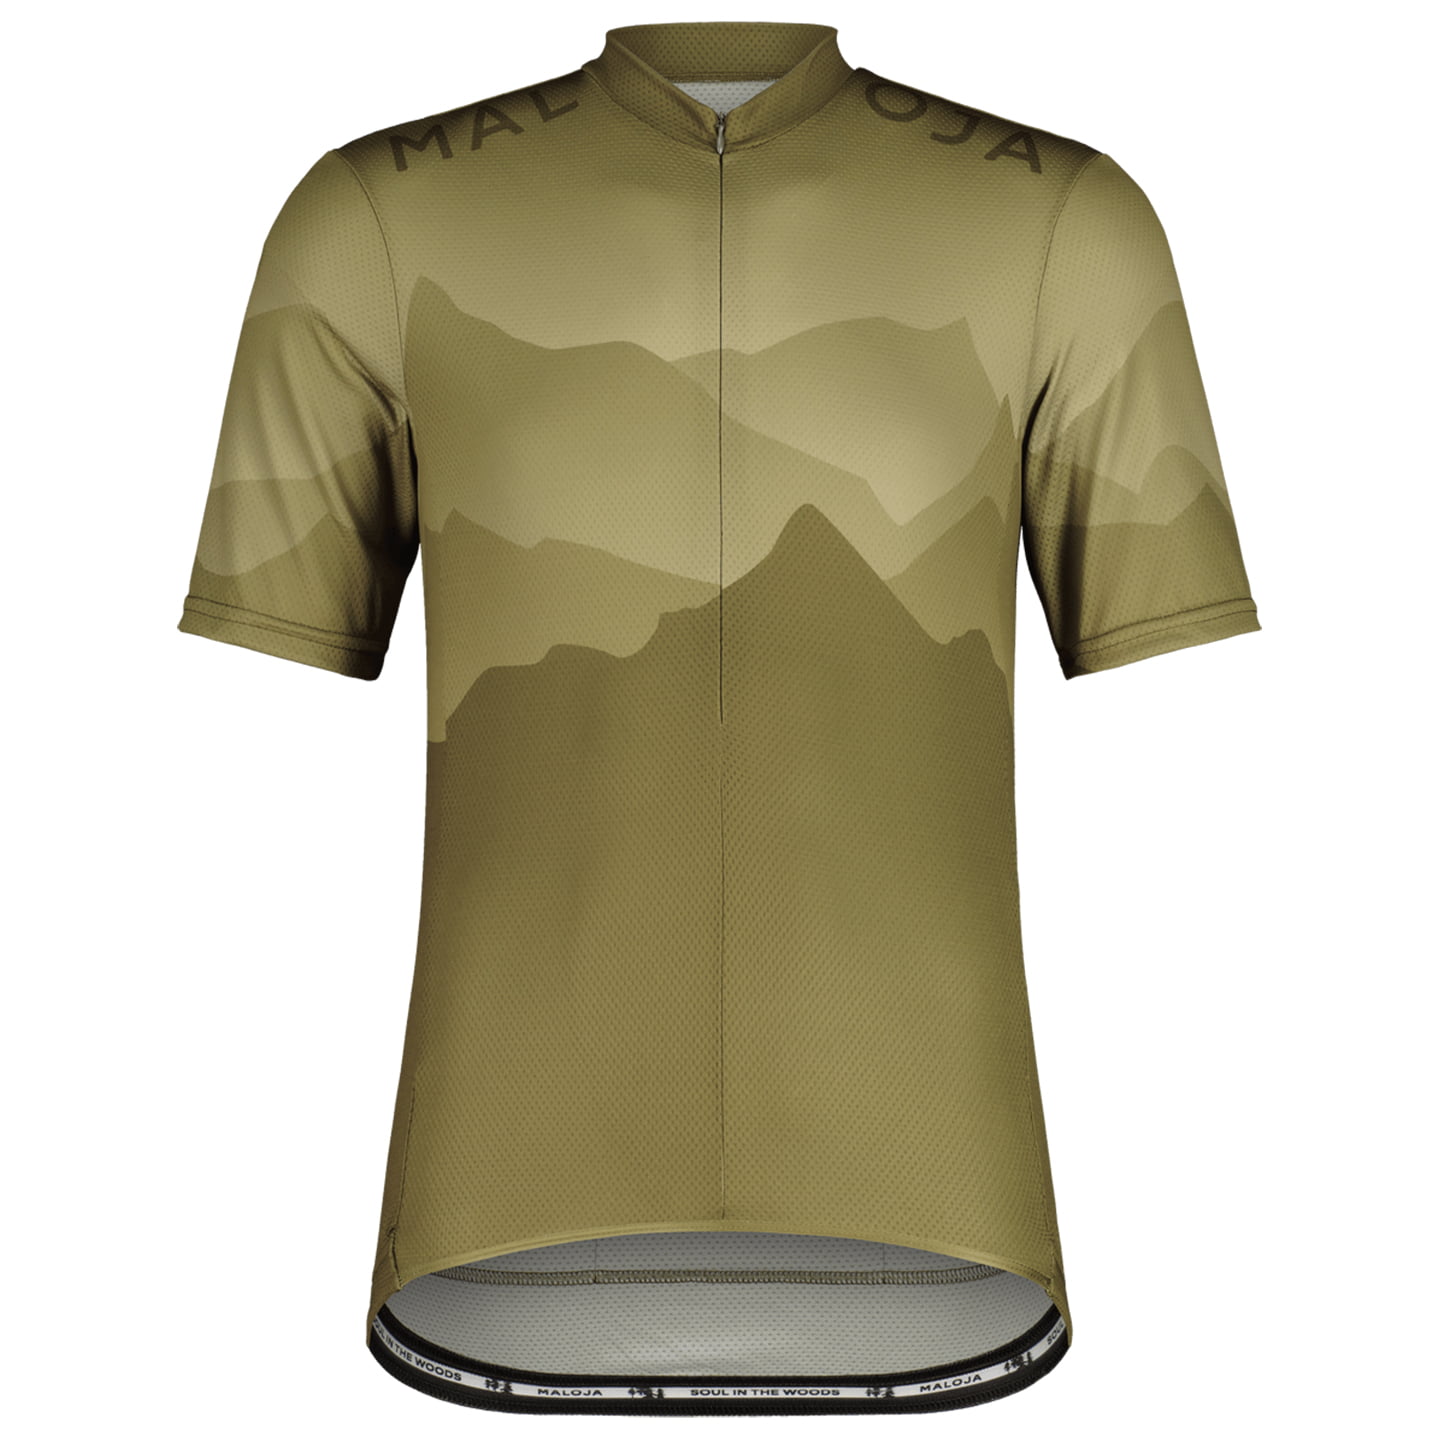 MALOJA PinzagenM. Short Sleeve Jersey Short Sleeve Jersey, for men, size S, Cycling jersey, Cycling clothing